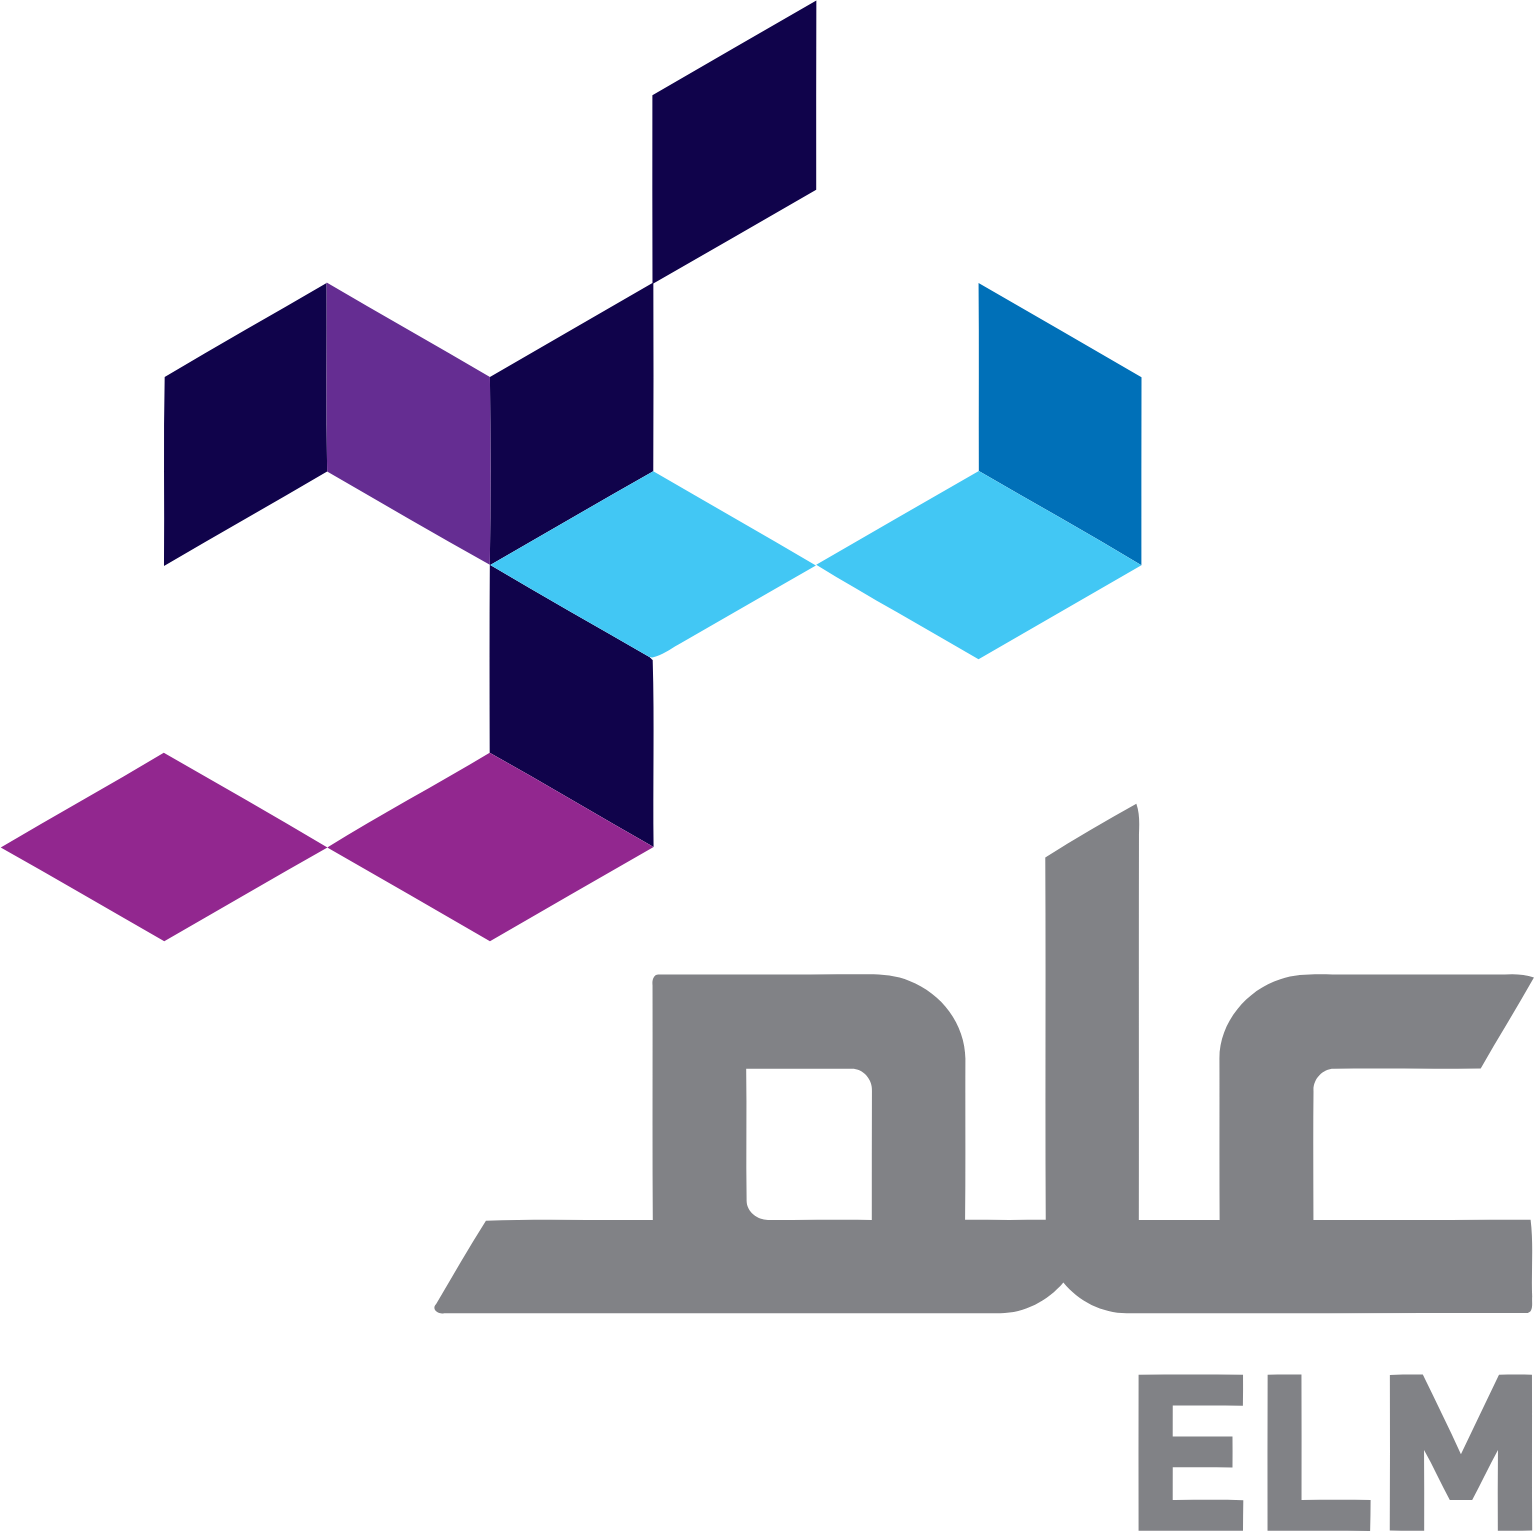 Elm Company logo large (transparent PNG)